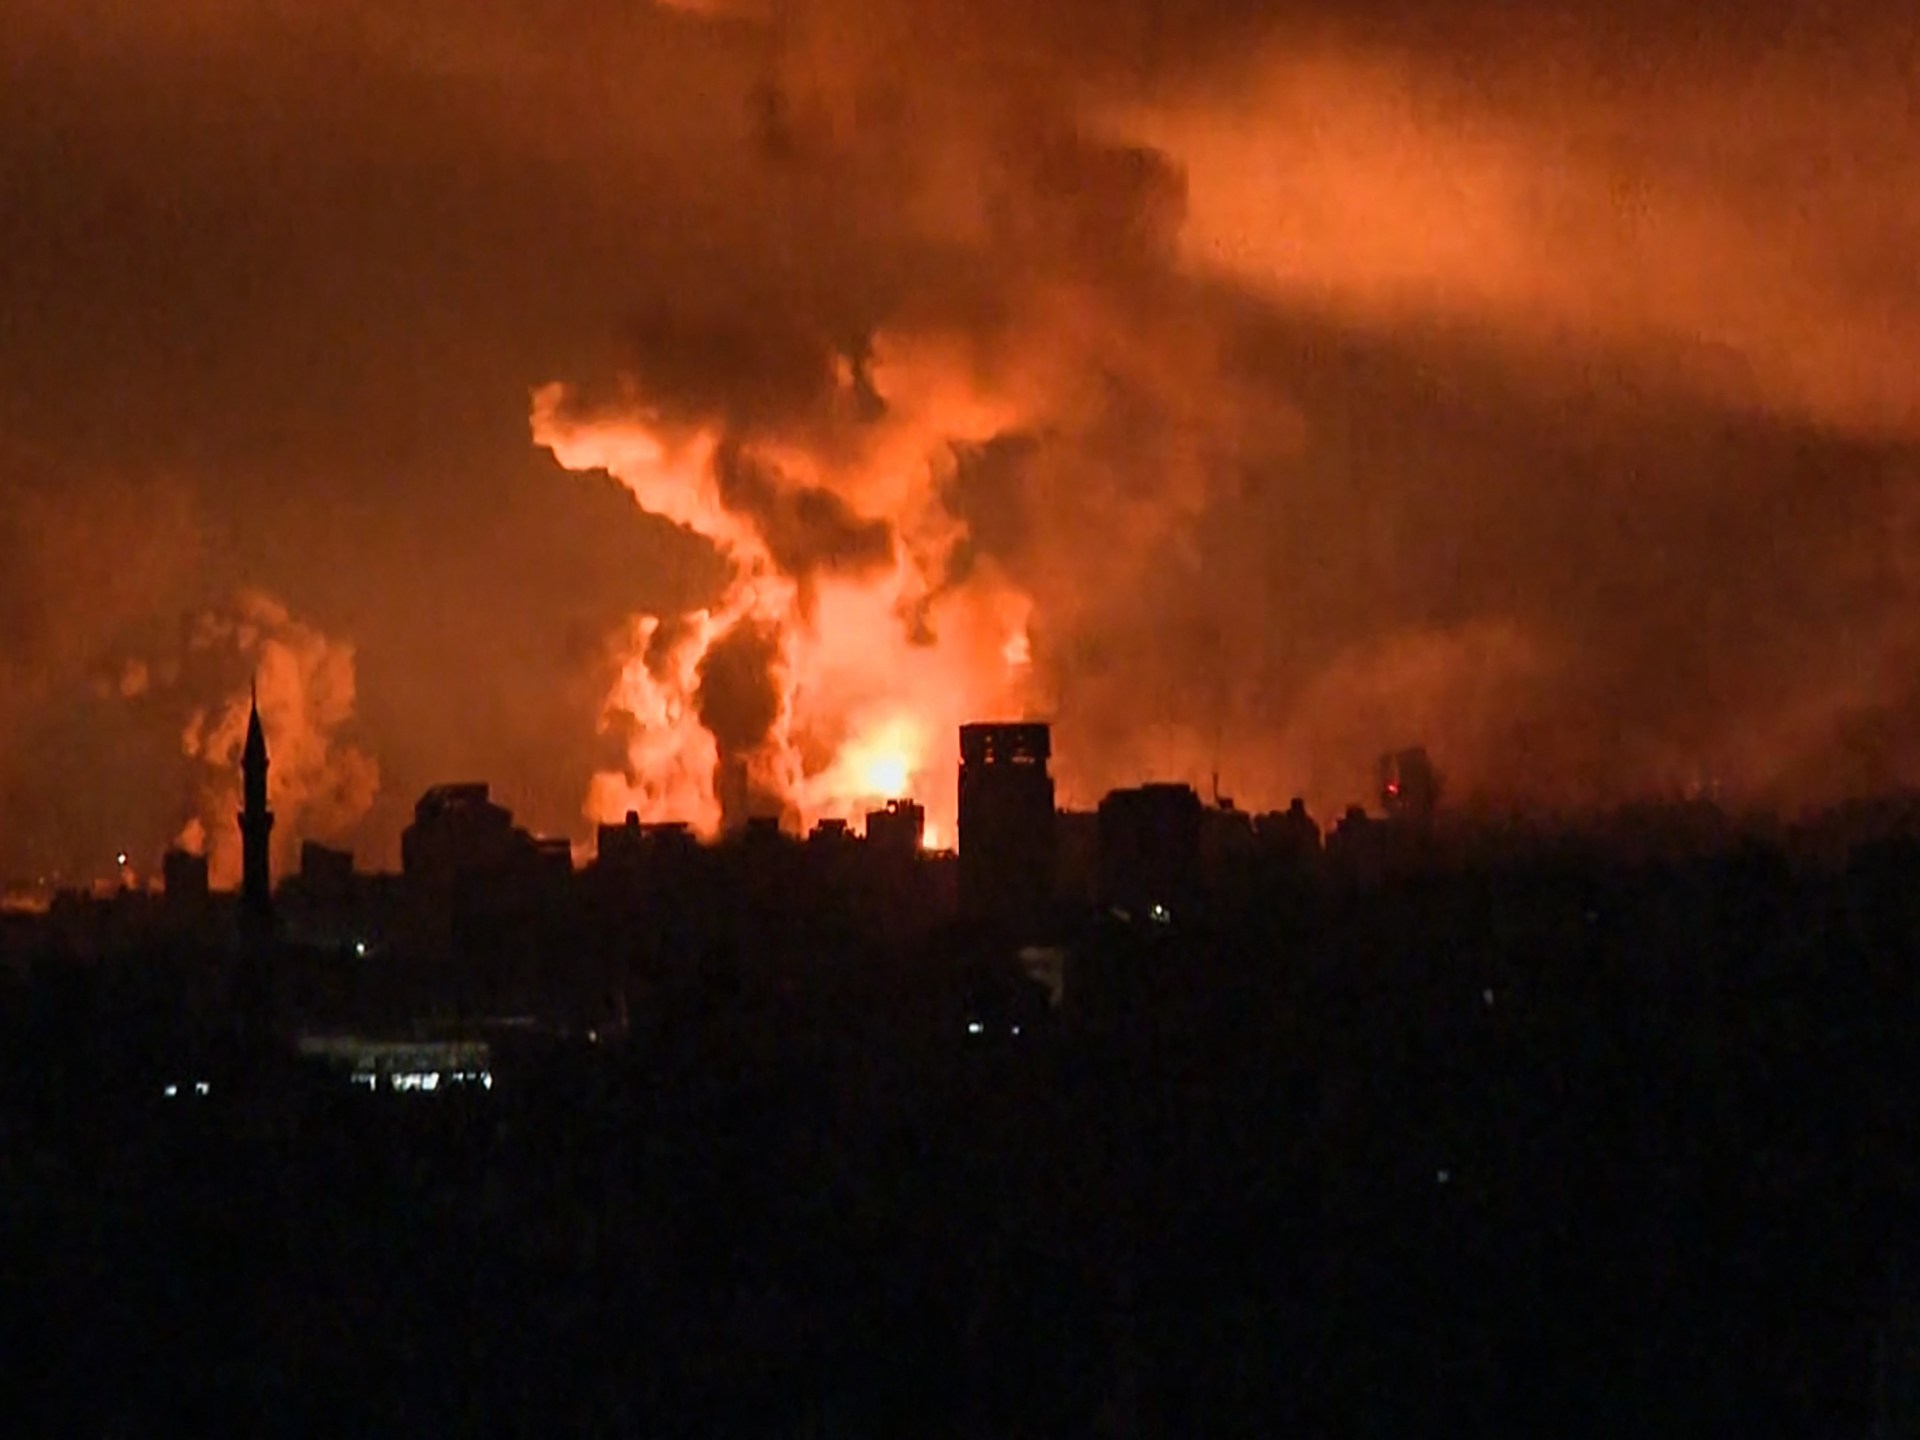 Gaza’s communications blackout raises concerns of Israeli war crimes